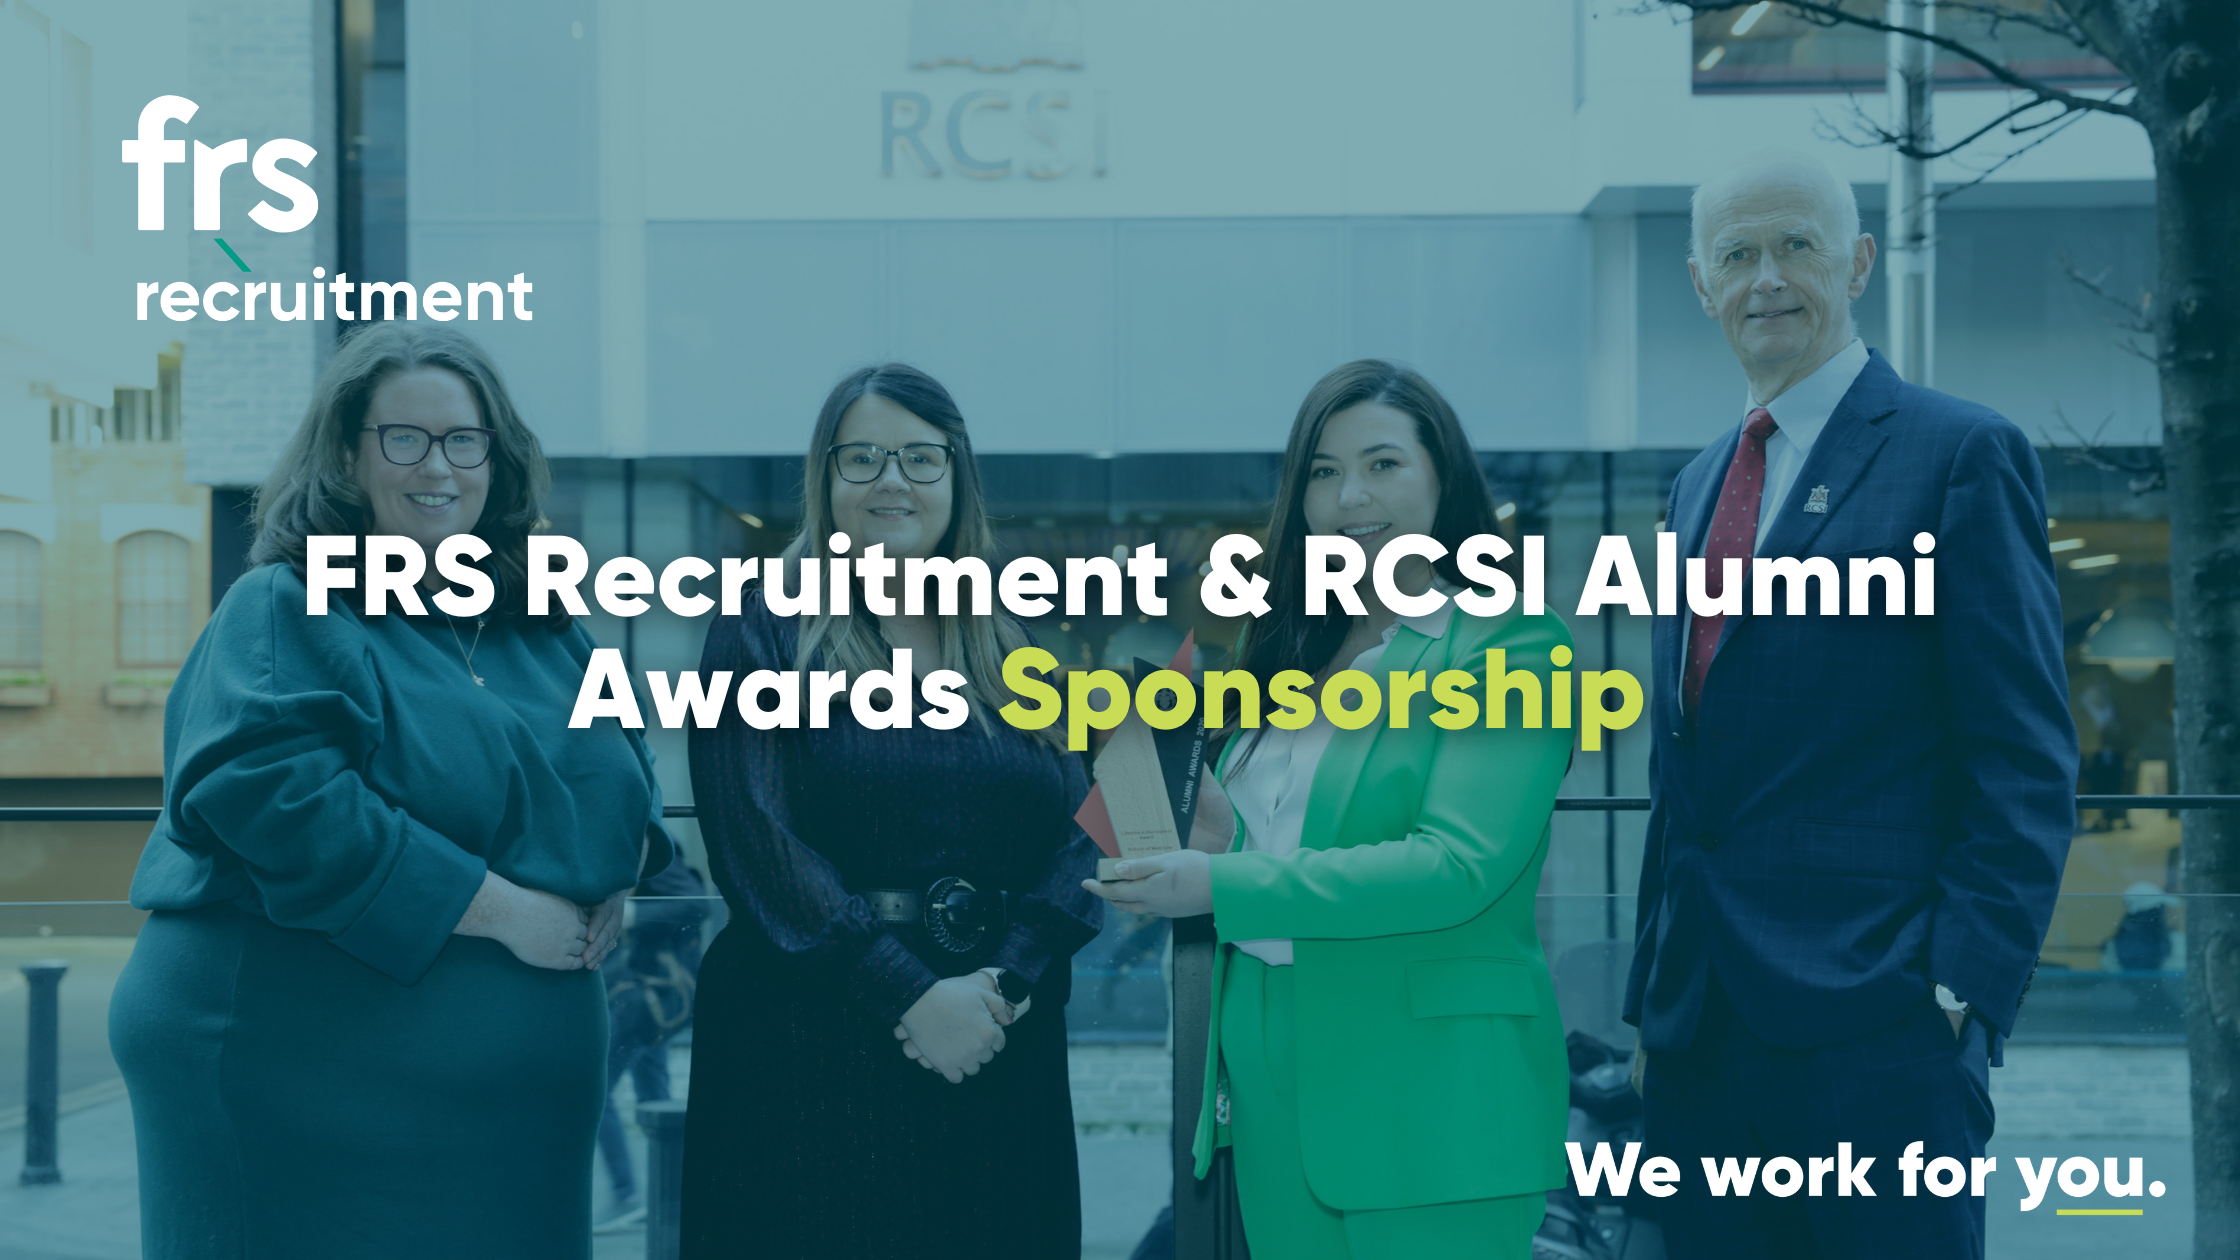 FRS Recruitment Announced as New Sponsor of RCSI Alumni Awards